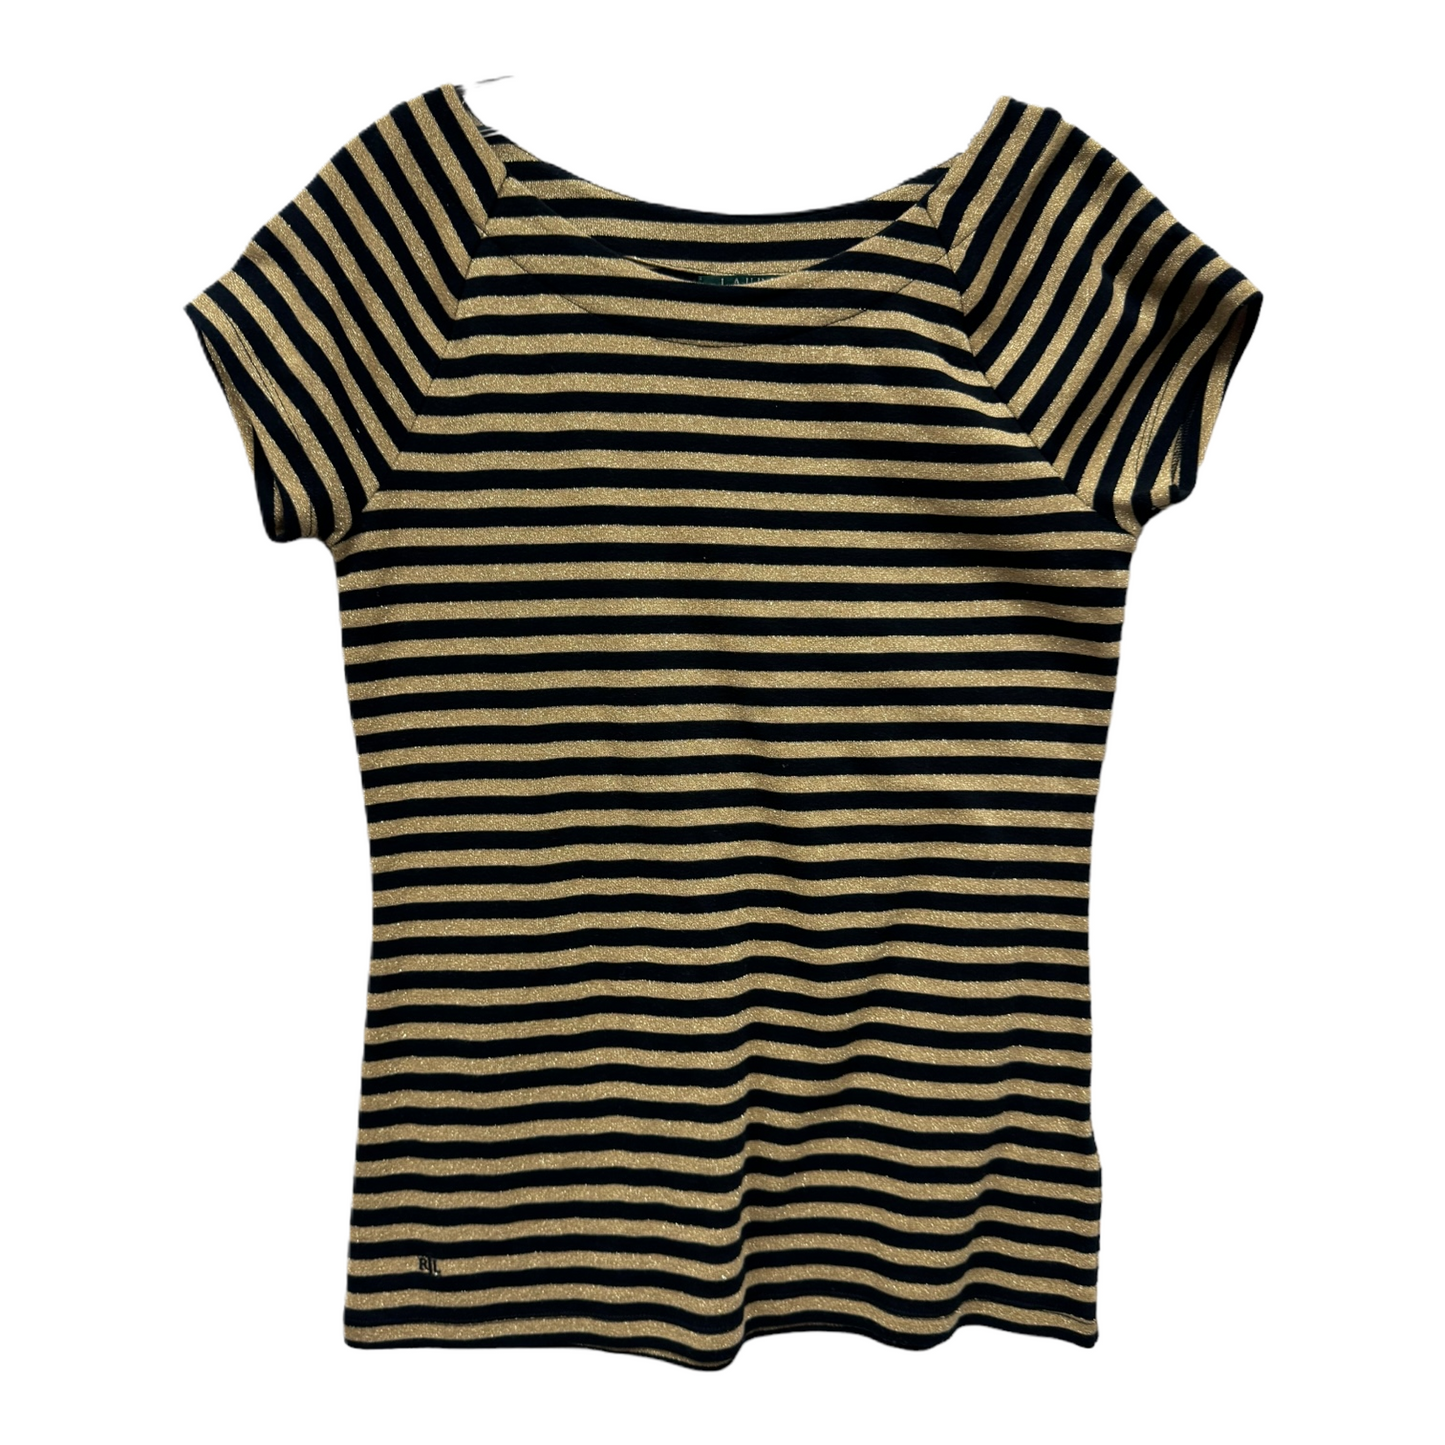 Black & Gold Top Short Sleeve By Lauren By Ralph Lauren, Size: L